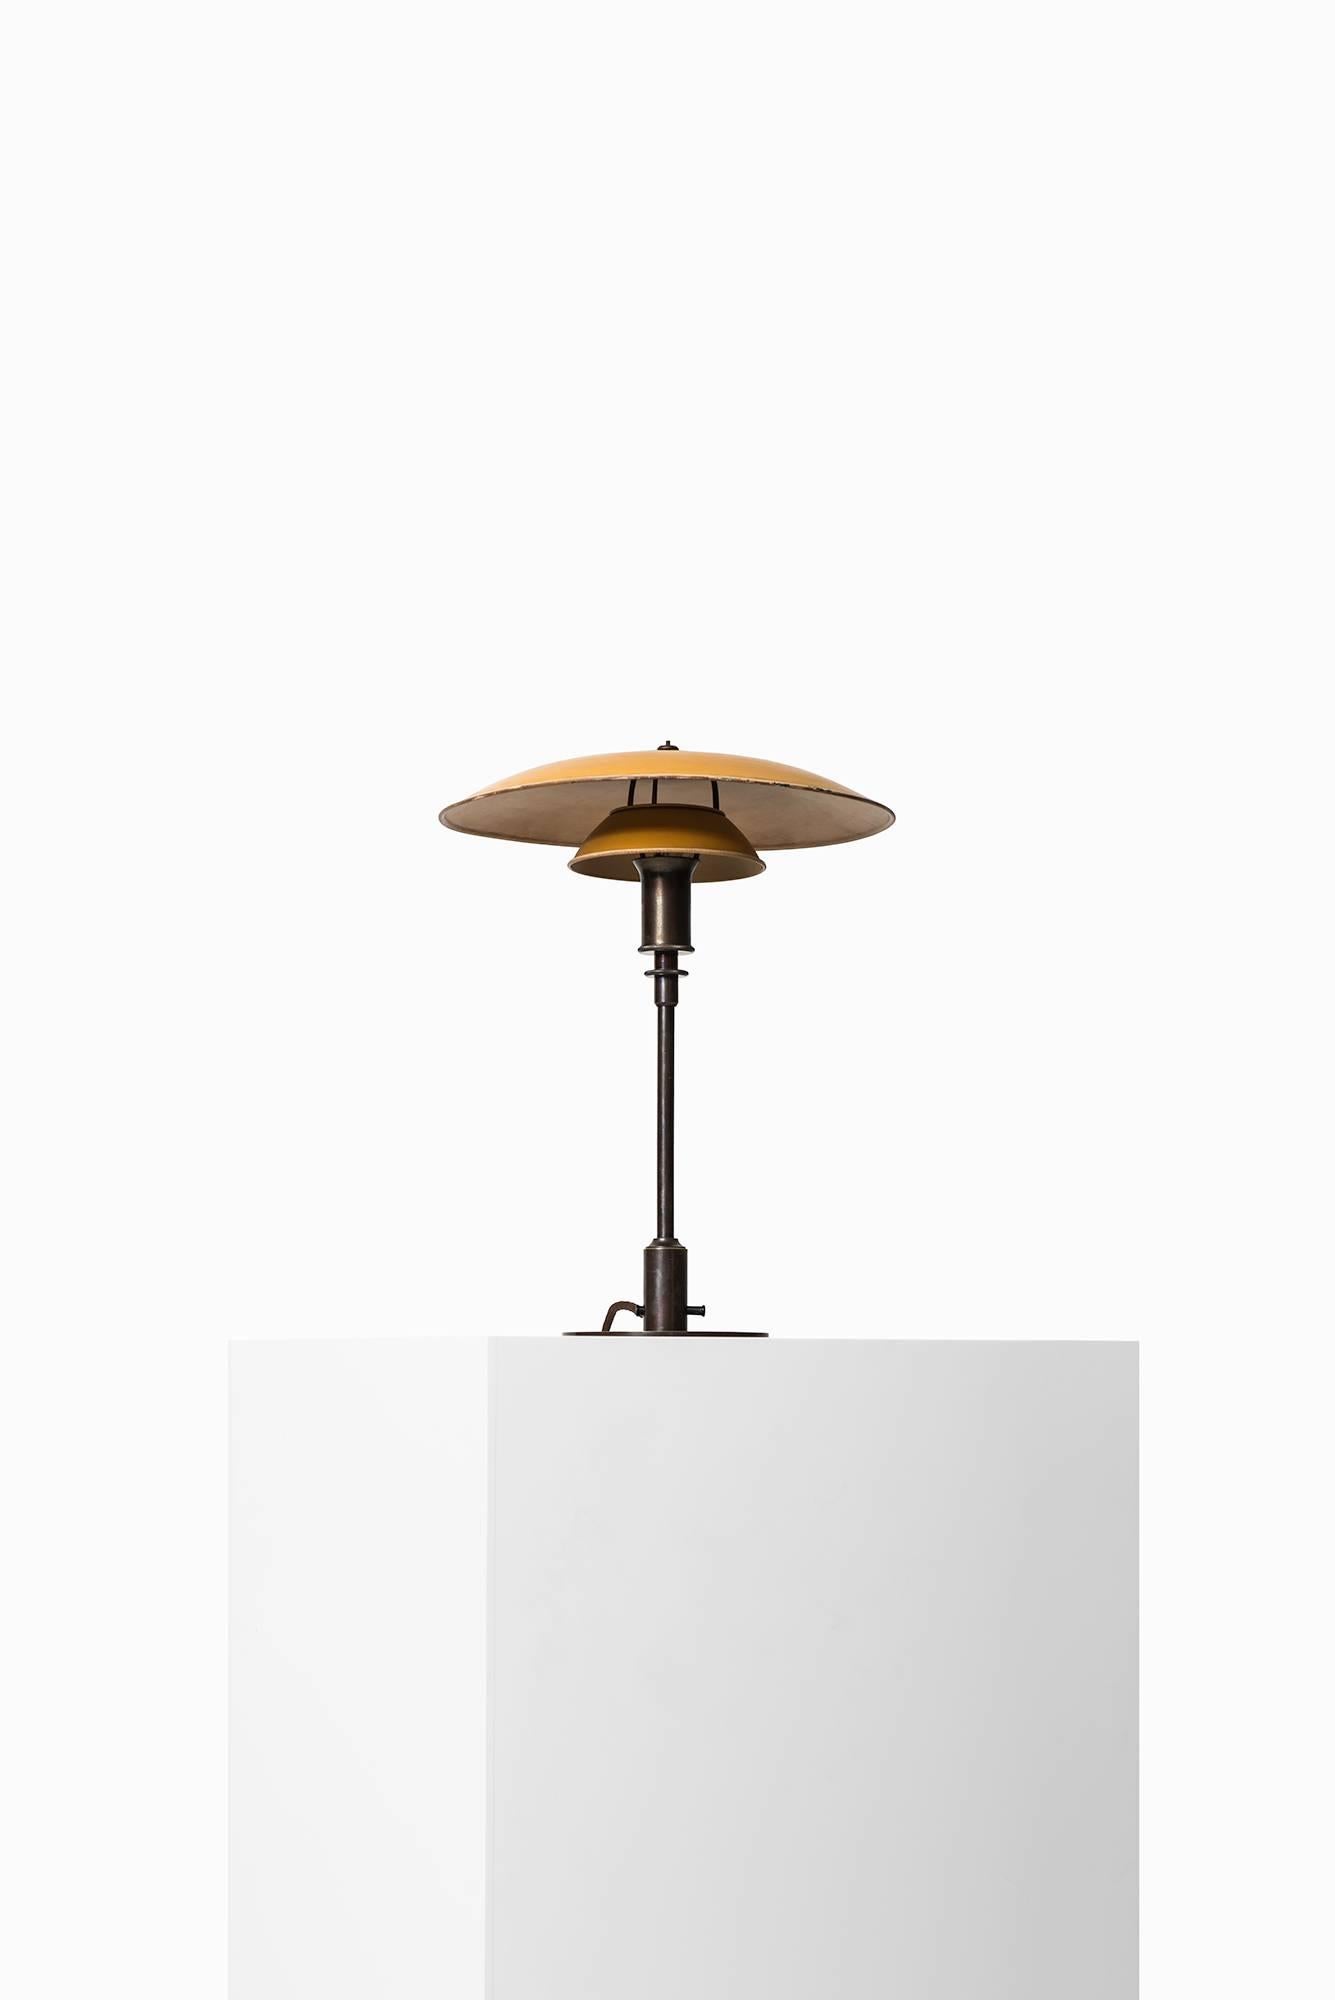 Scandinavian Modern Poul Henningsen Table Lamp Model PH 3½/2 Produced by Louis Poulsen in Denmark